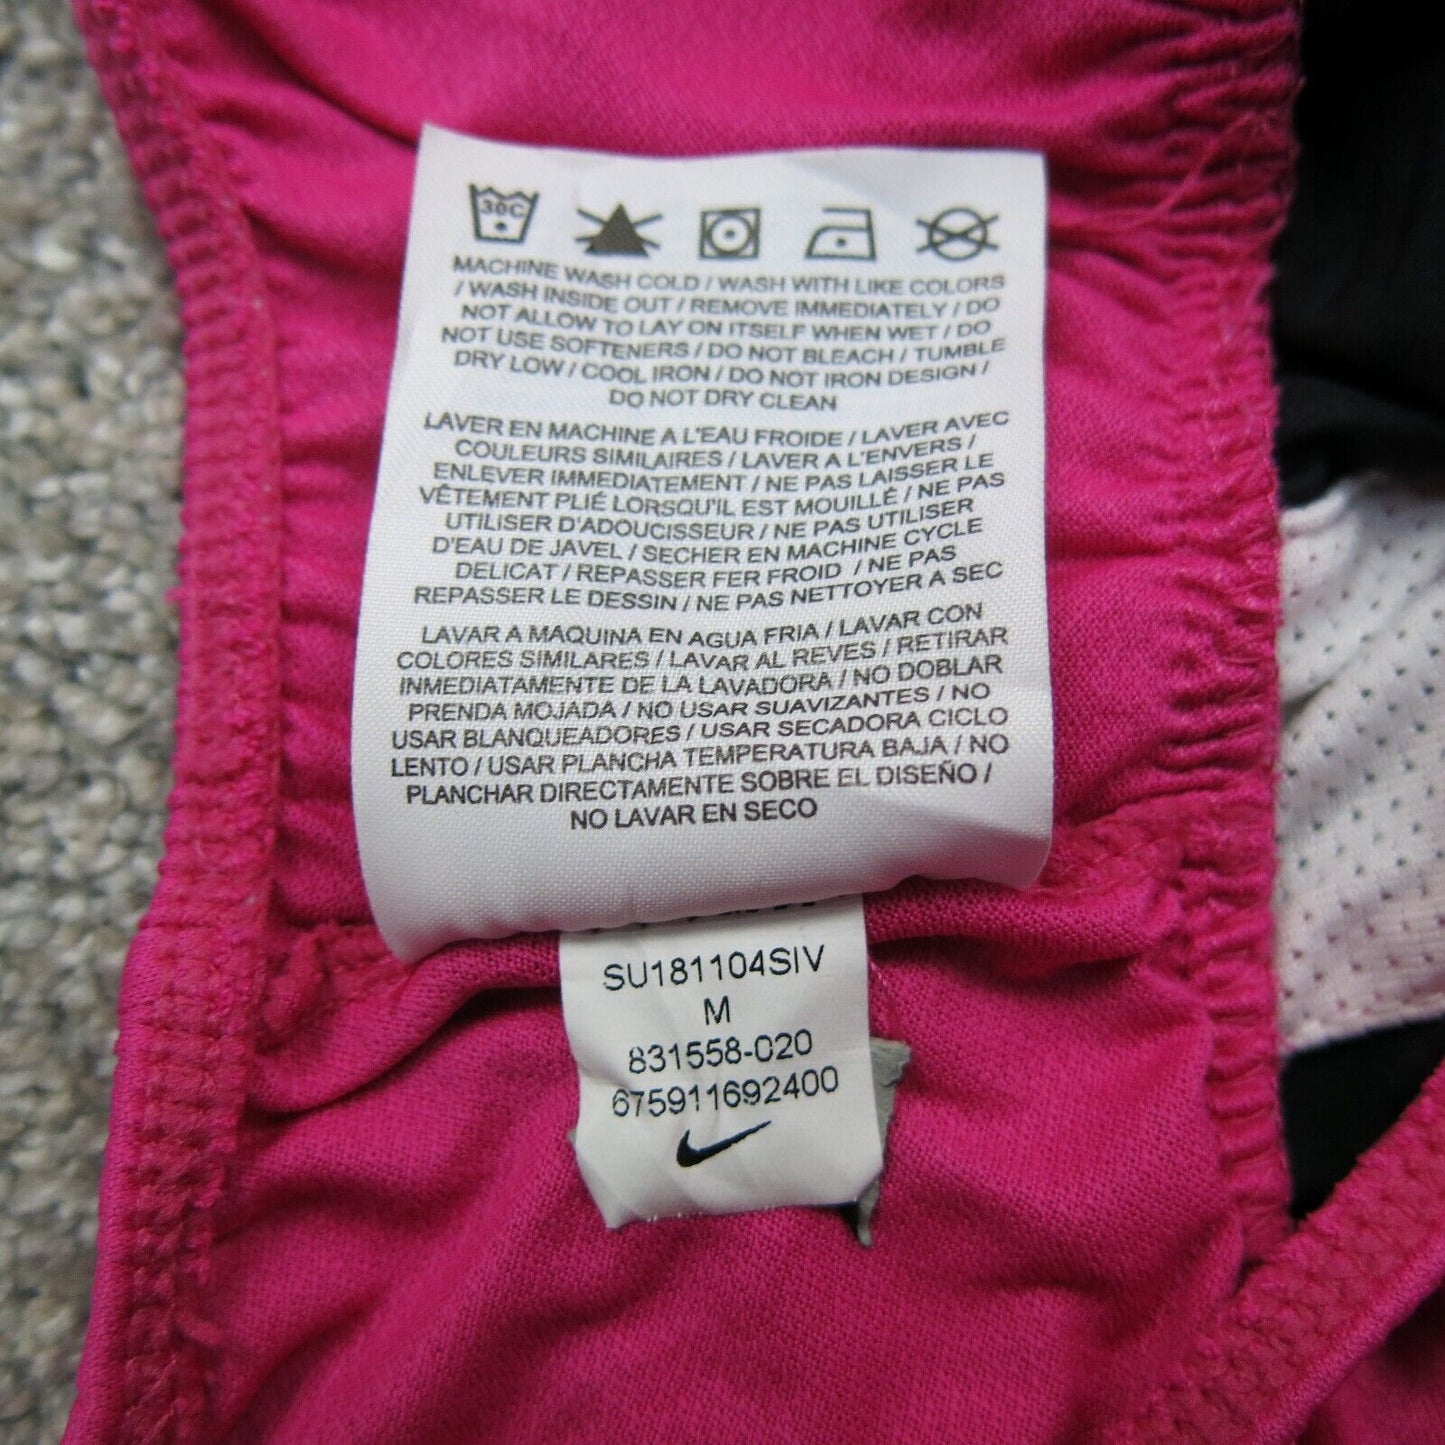 Nike Women Athletics Shorts  Dri Fit Activewear Sports Logo Black Pink Sz Medium